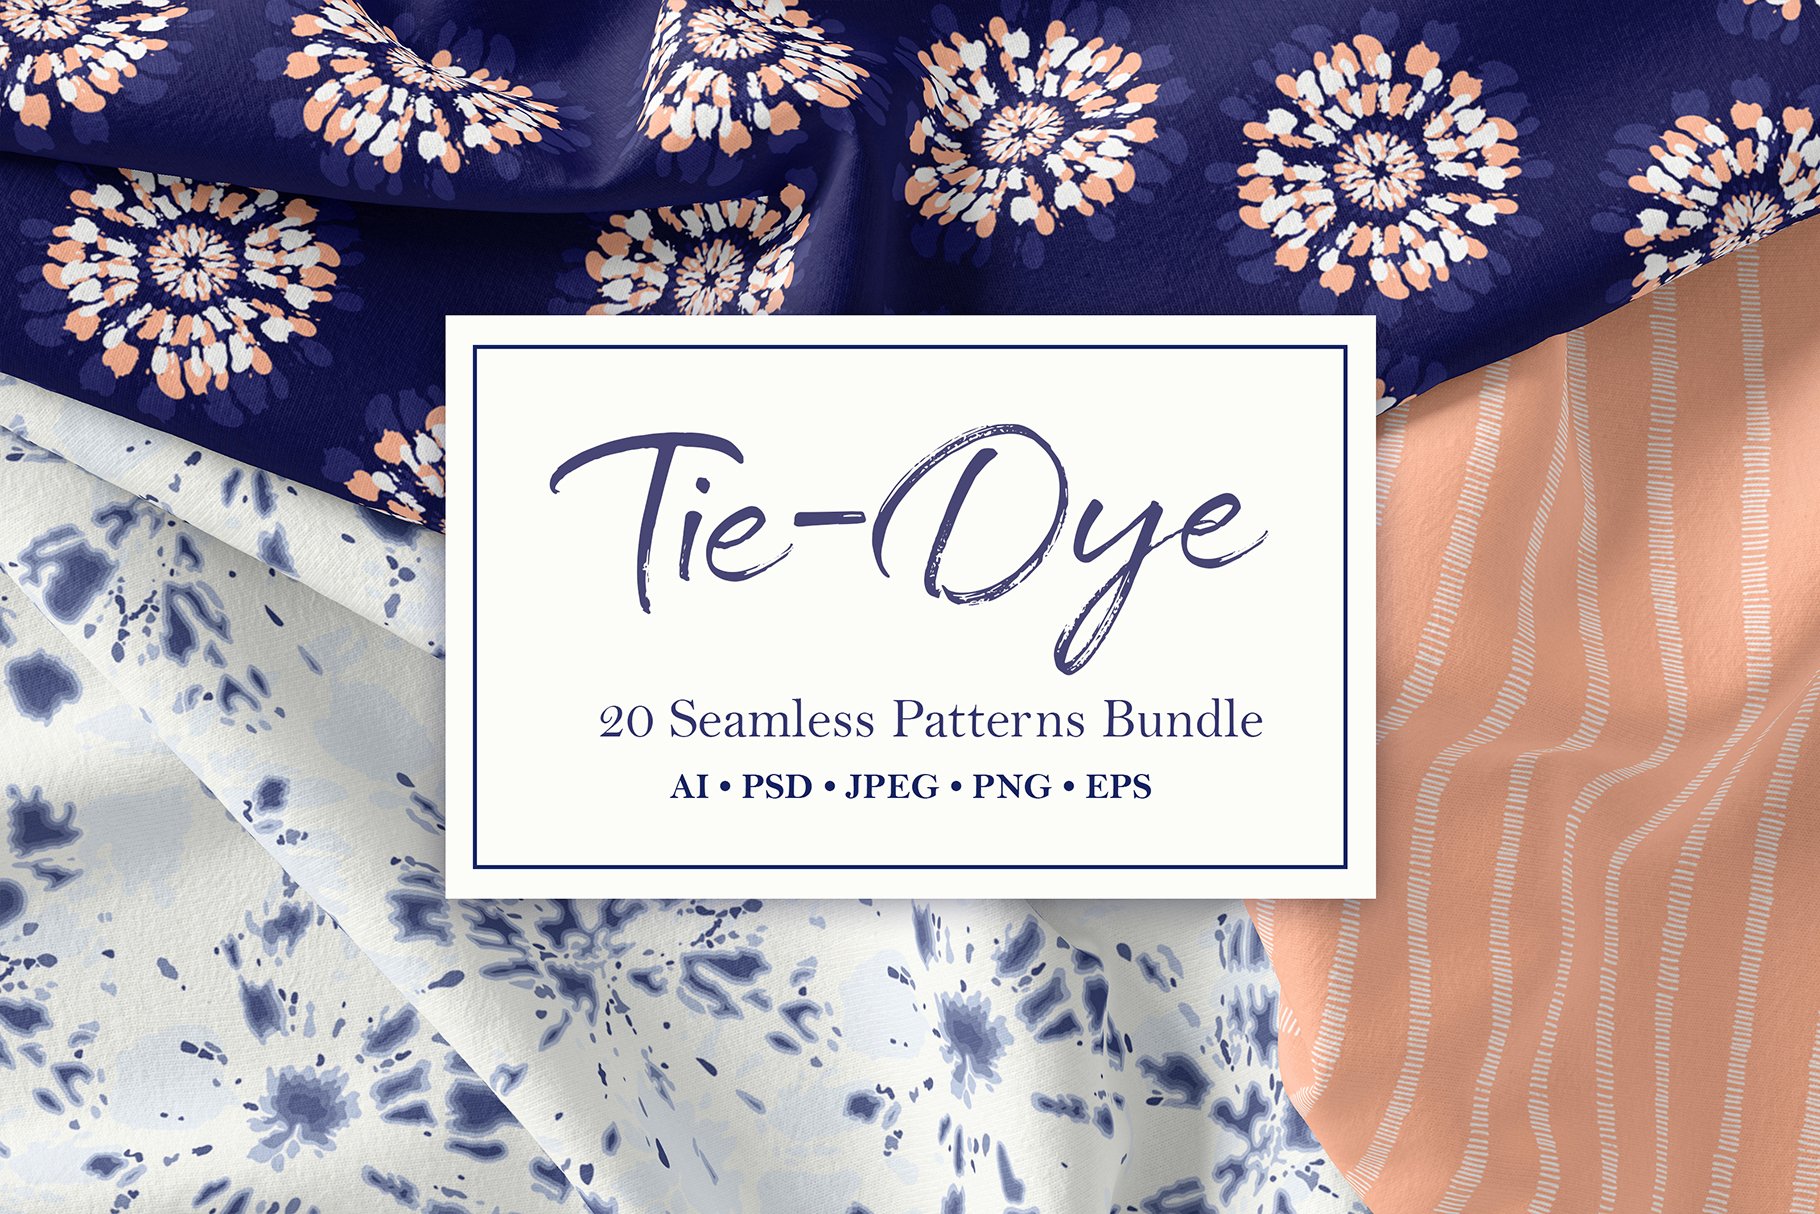 20 Tie-Dye Patterns Bundle cover image.